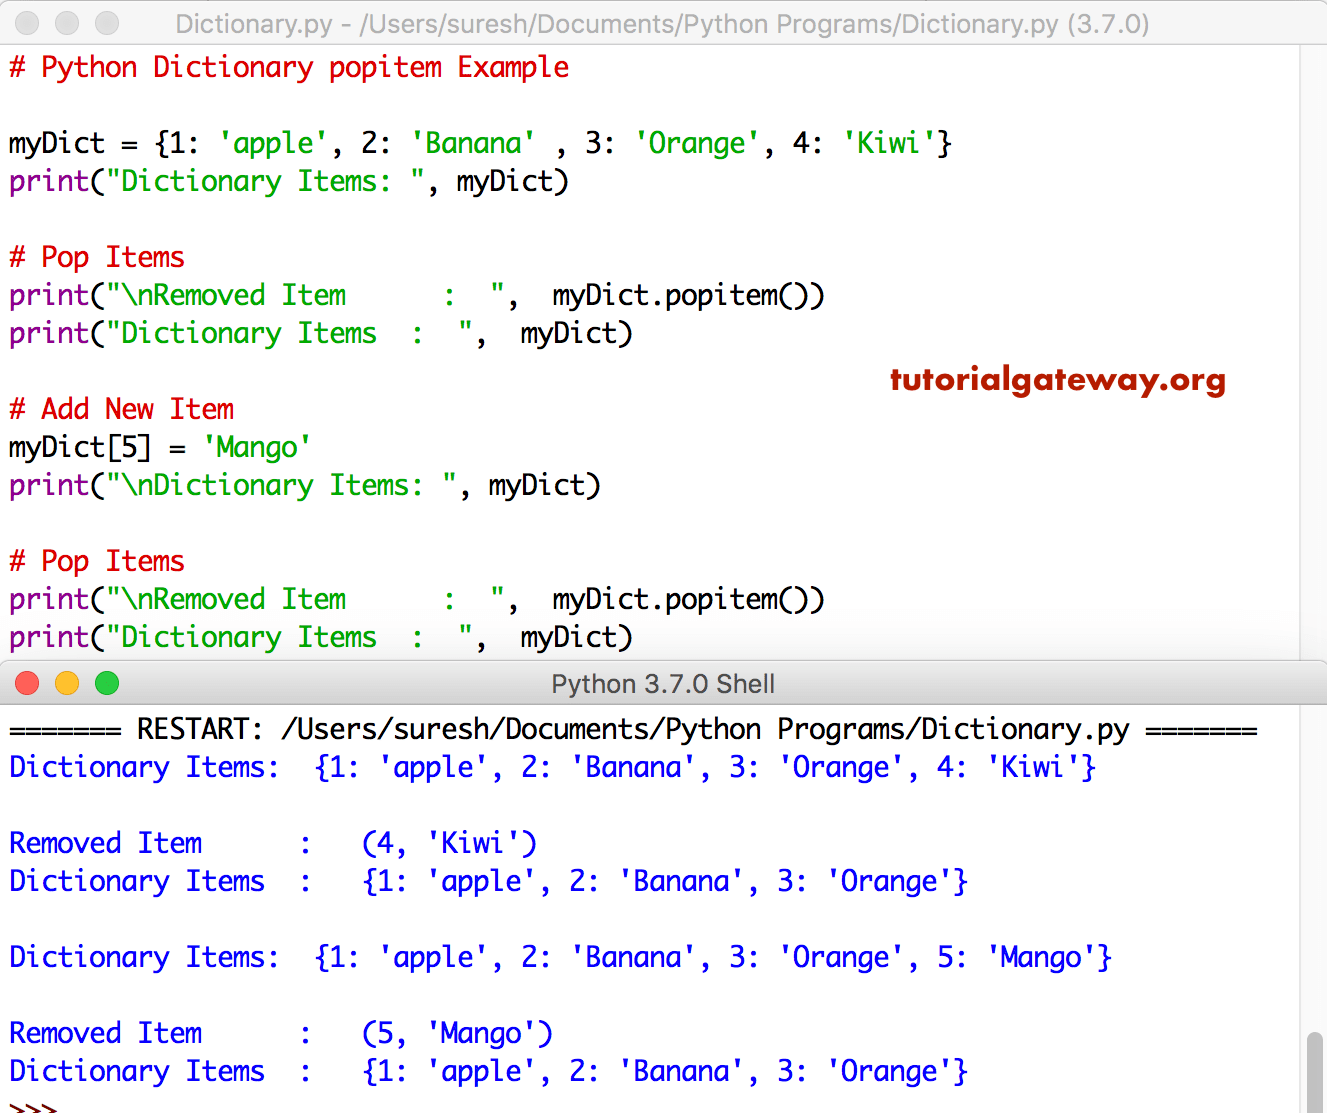 Python Dictionary popitem Example